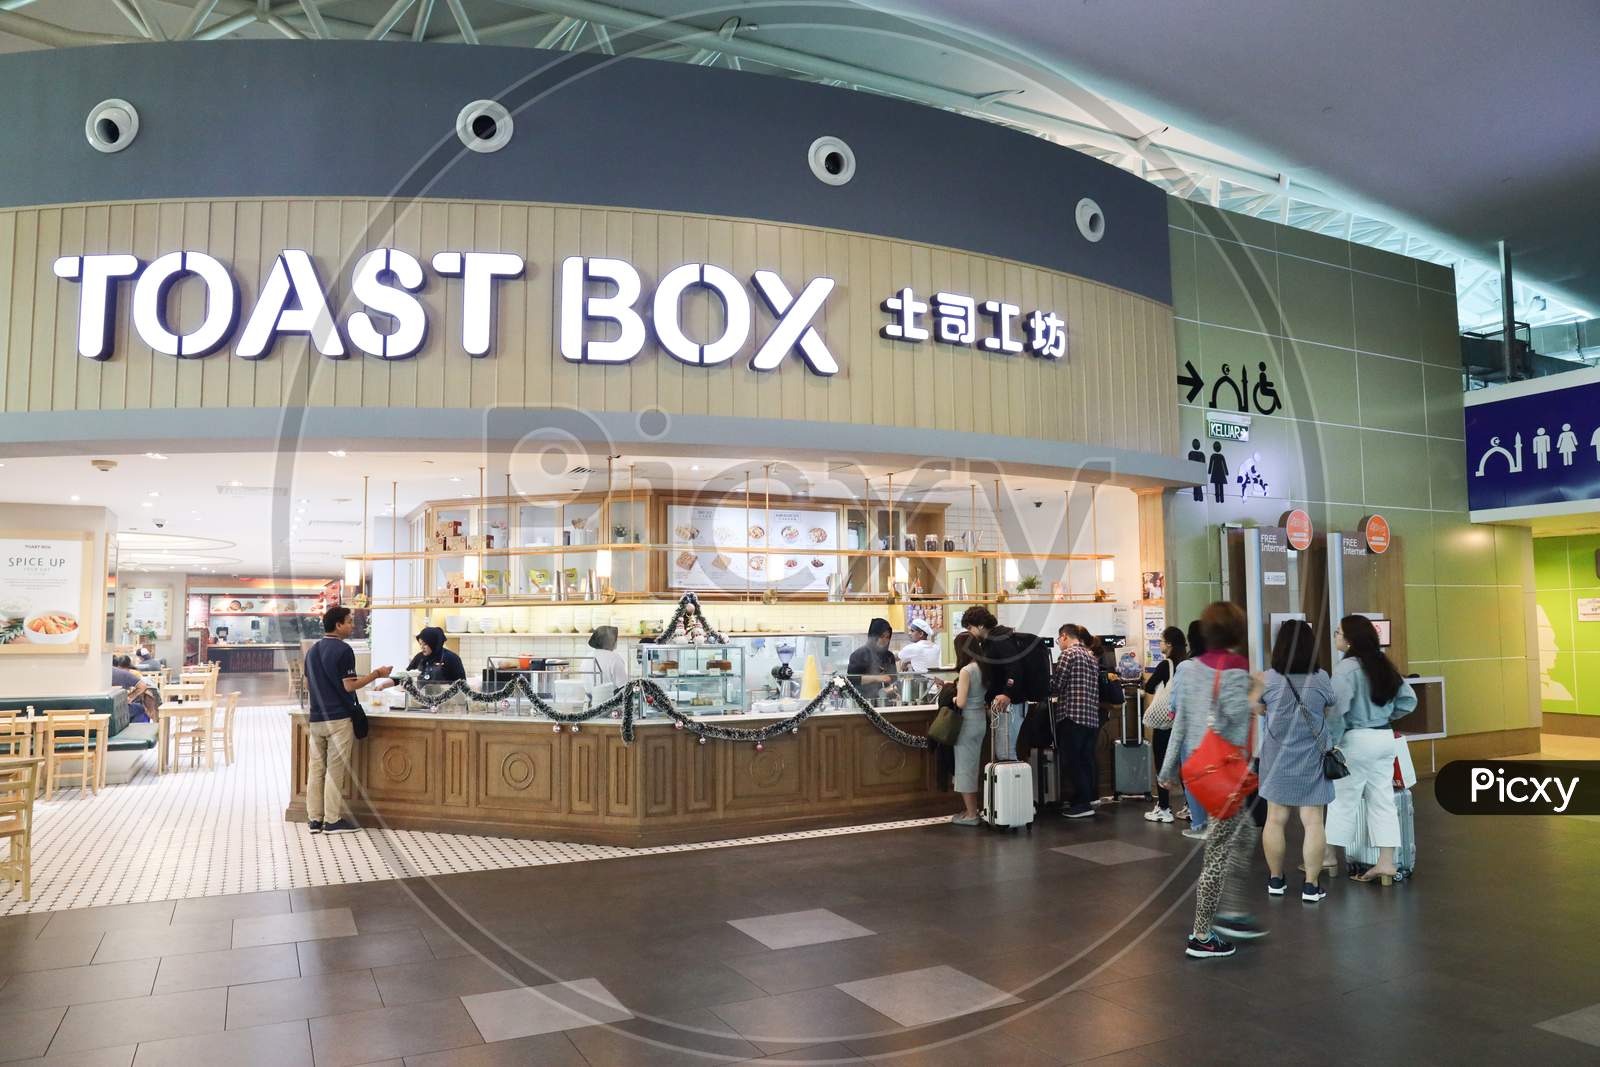 Toast Box Cafe Stall At KL International Airport, Malaysia